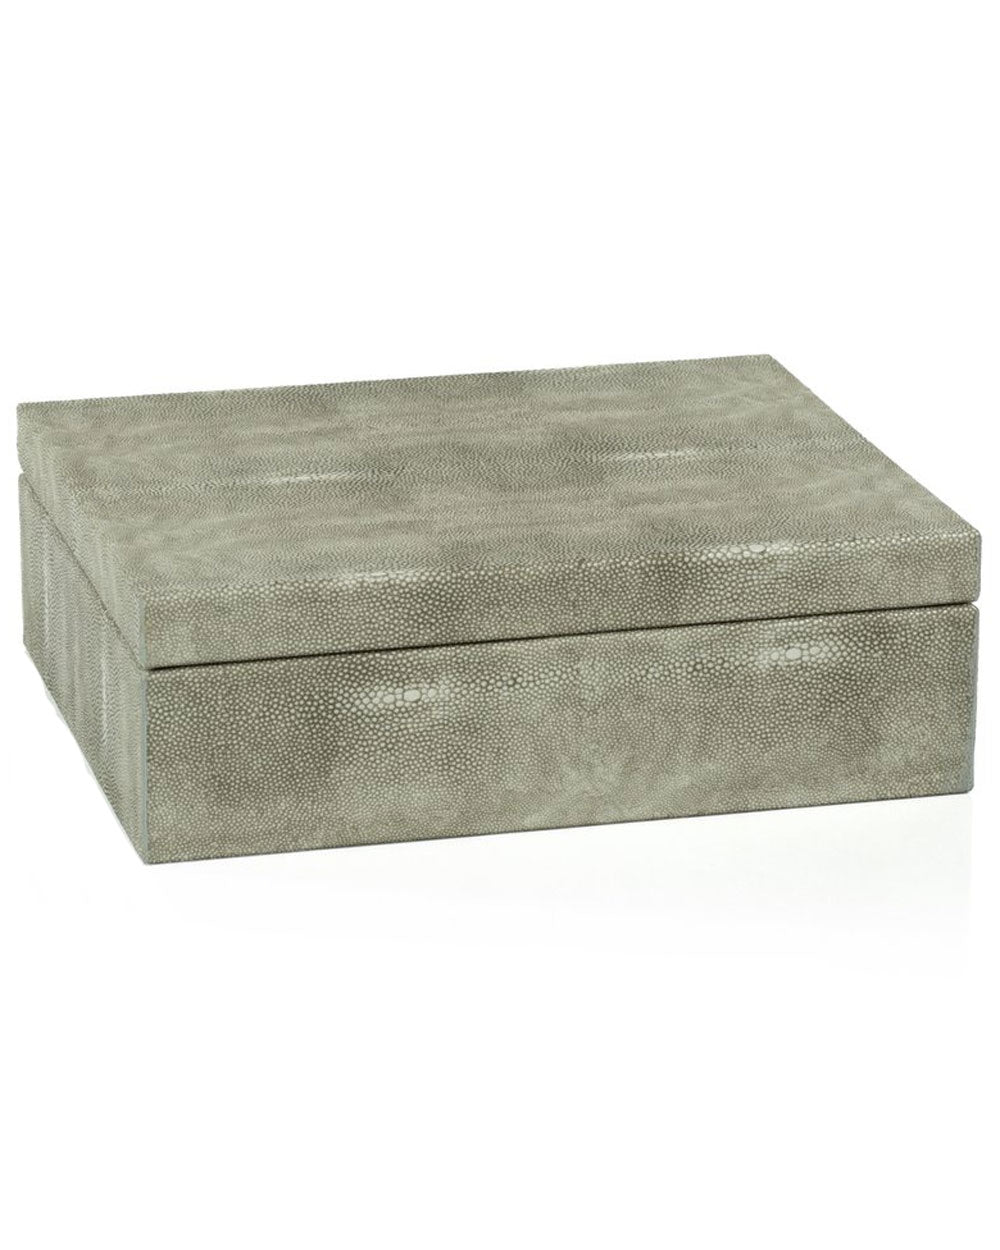 Moorea Shagreen Large Leather Box